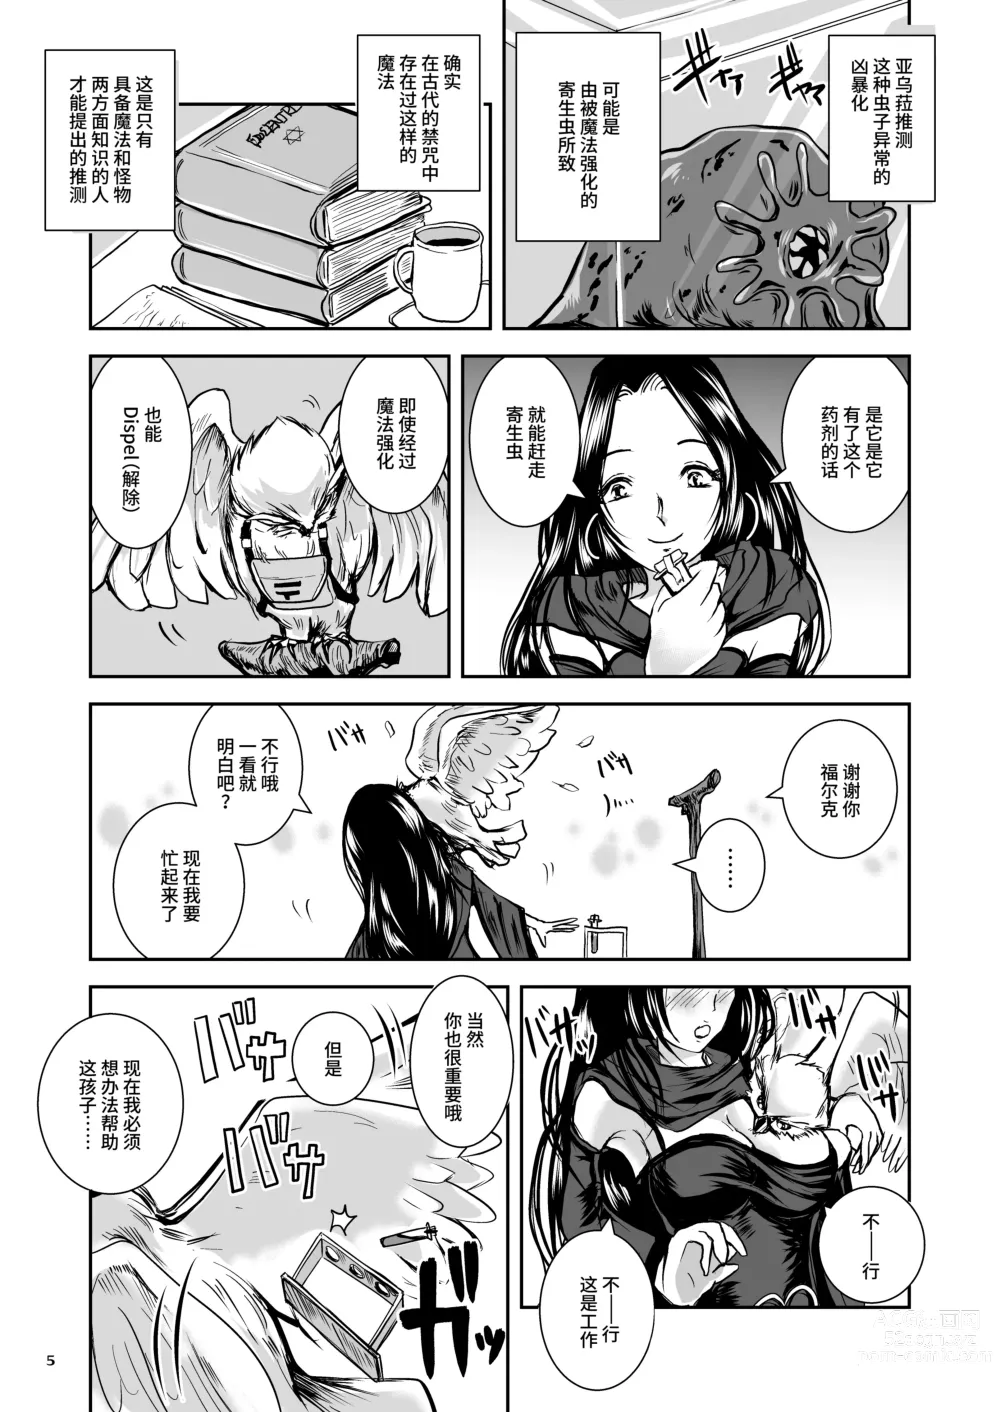 Page 5 of doujinshi Oonamekuji to Kurokami no Mahoutsukai - Parasitized Giant Slugs V.S. Sorceress of the Black Hair as Aura